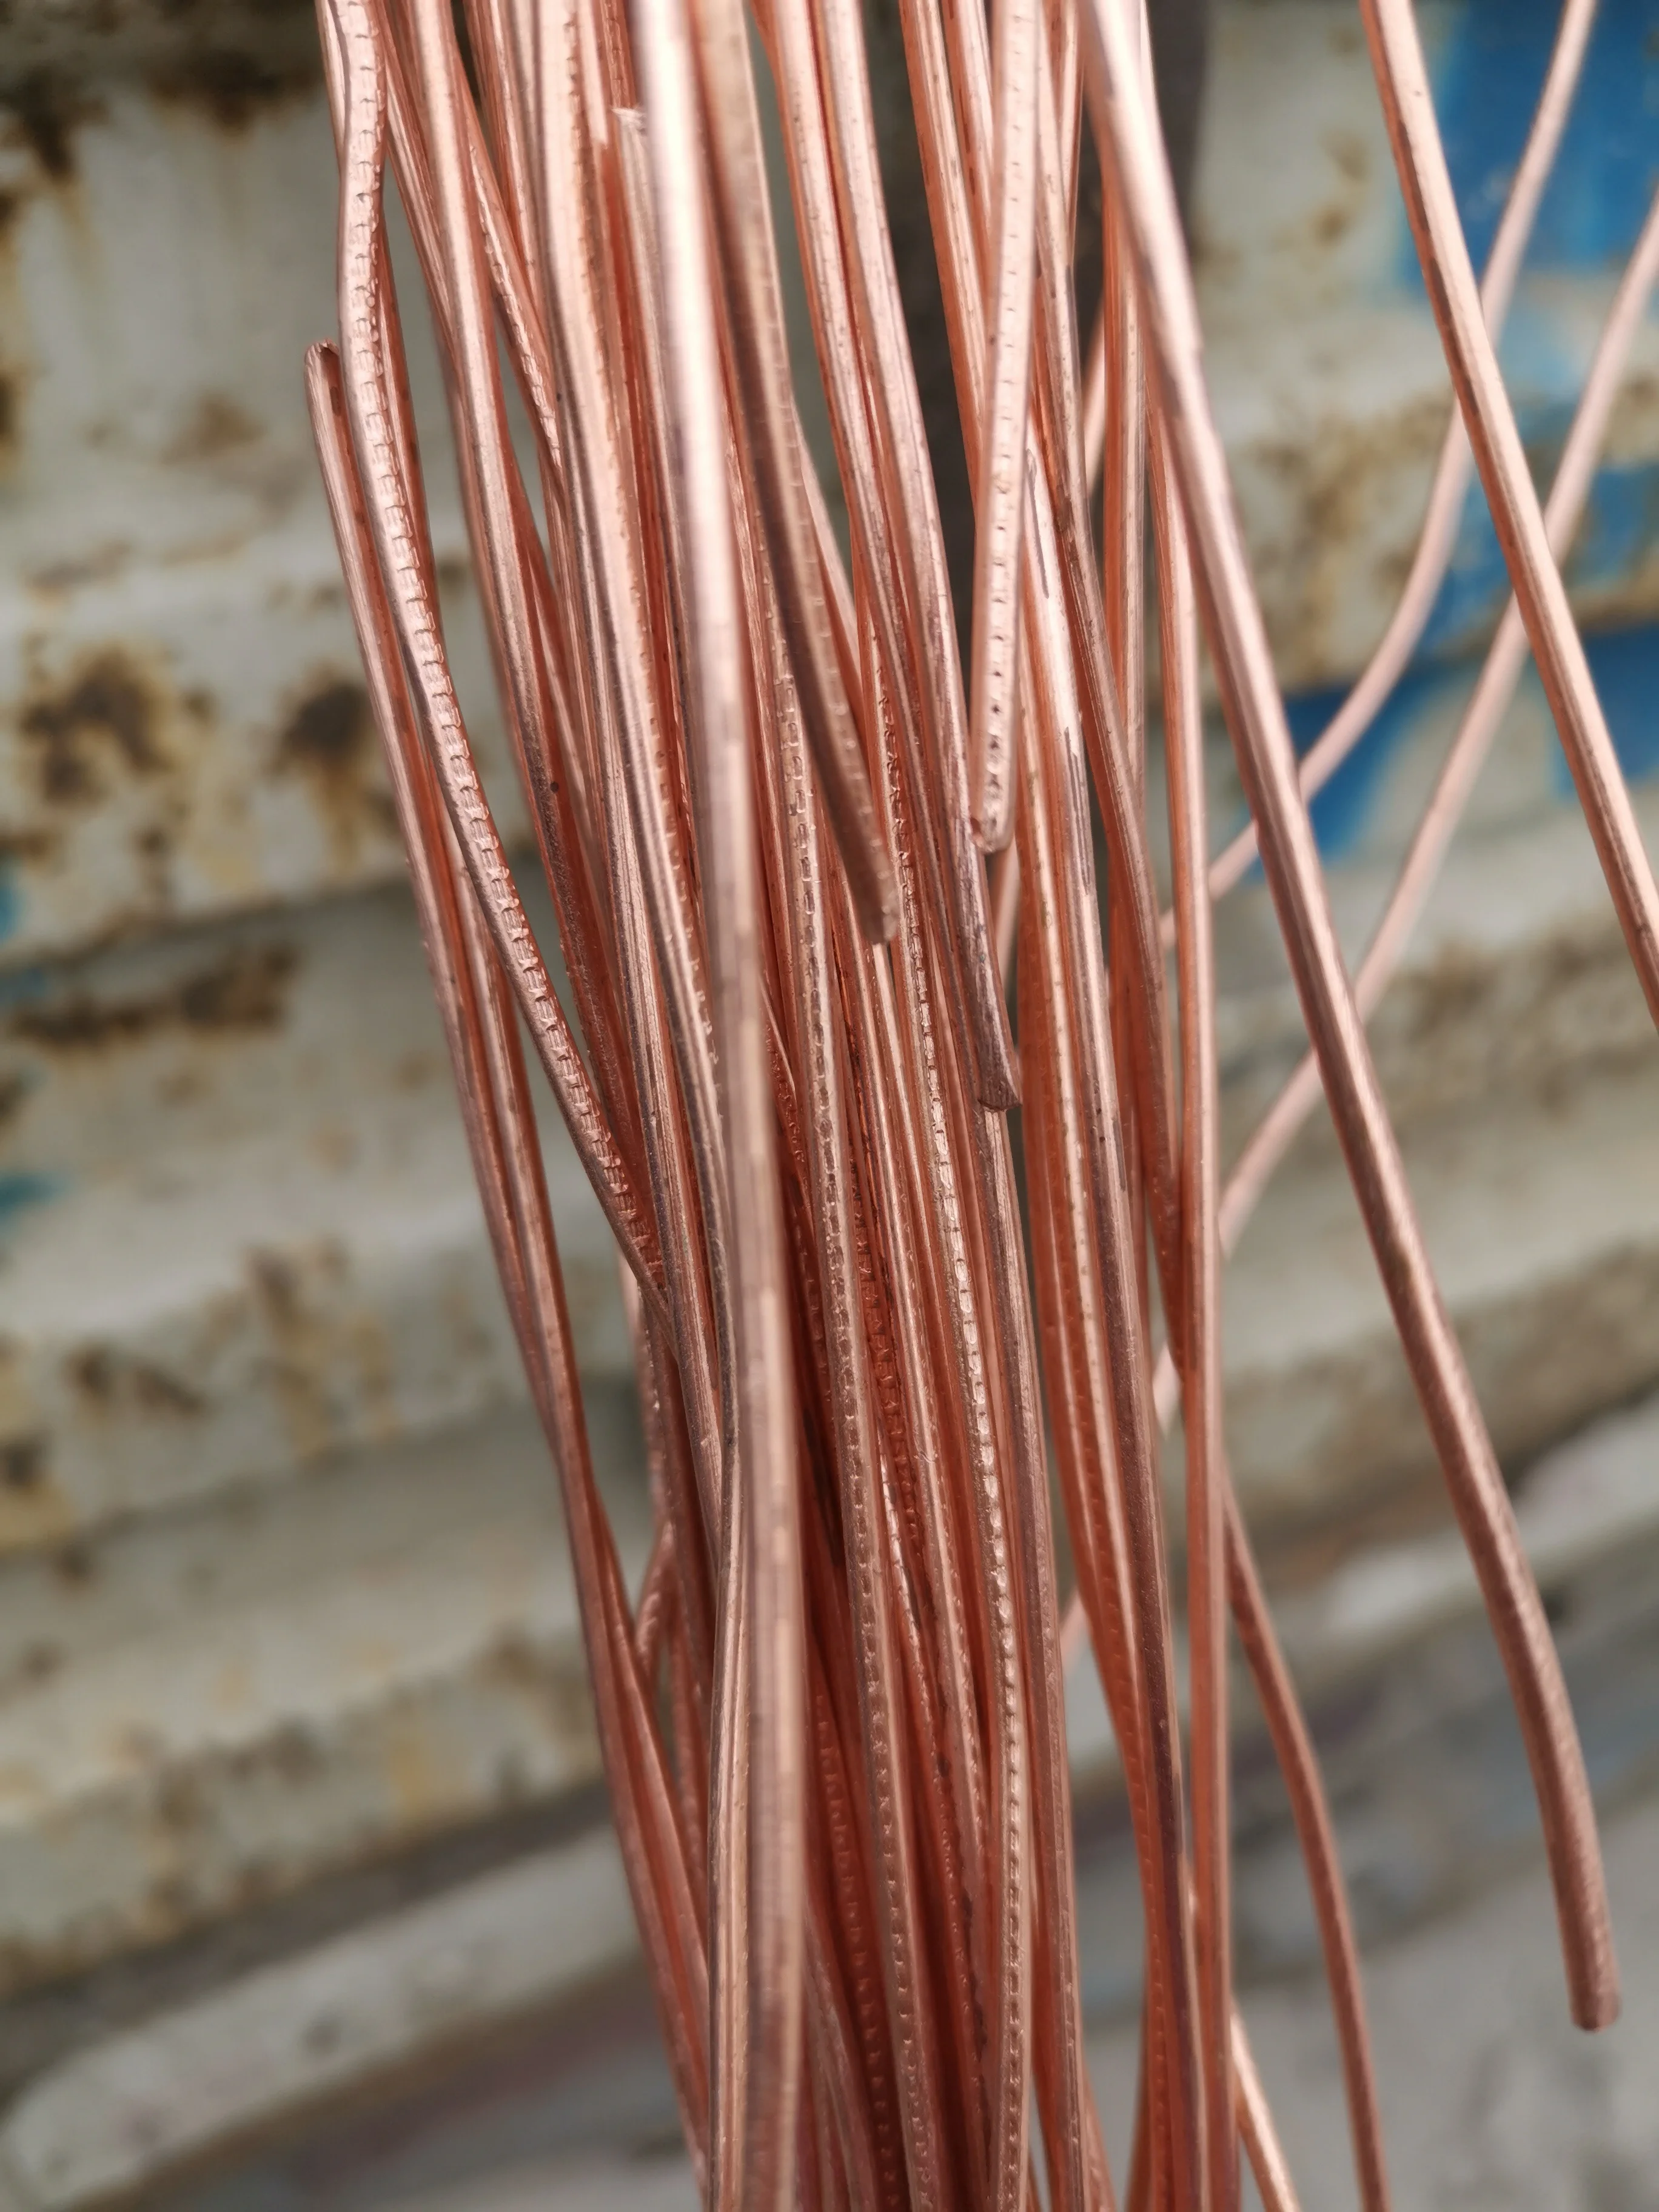 
Copper Wire Scrap 